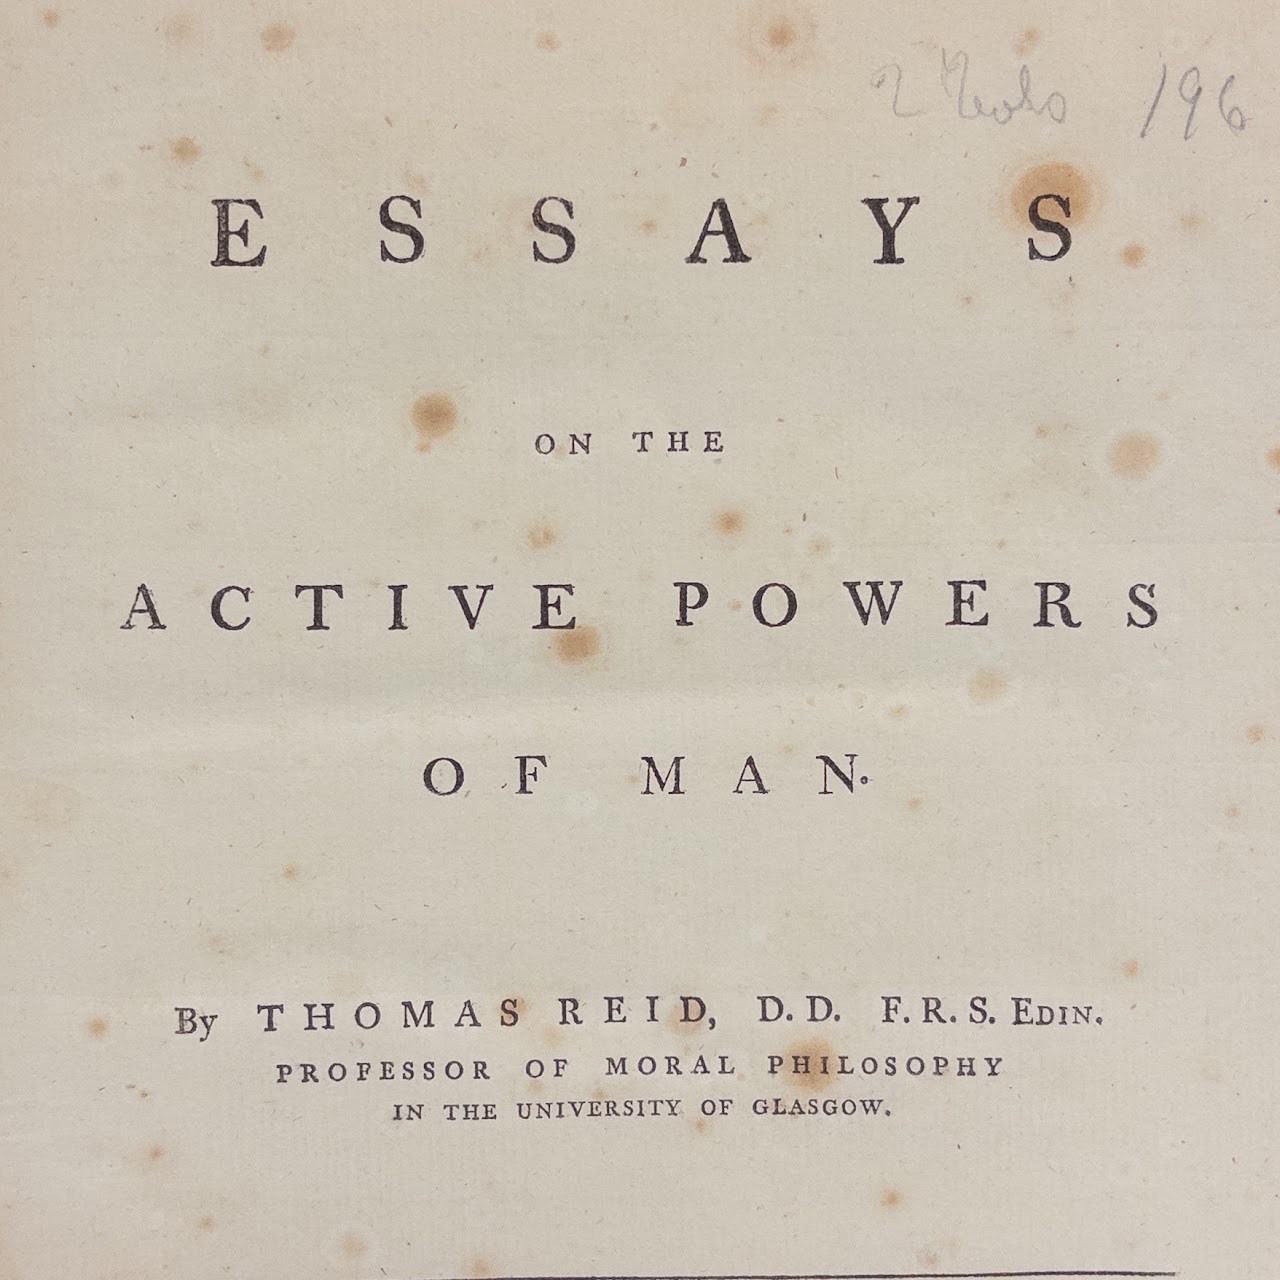 Thomas Reid, 'Essays on the Active Powers of Man' Two Volume Set